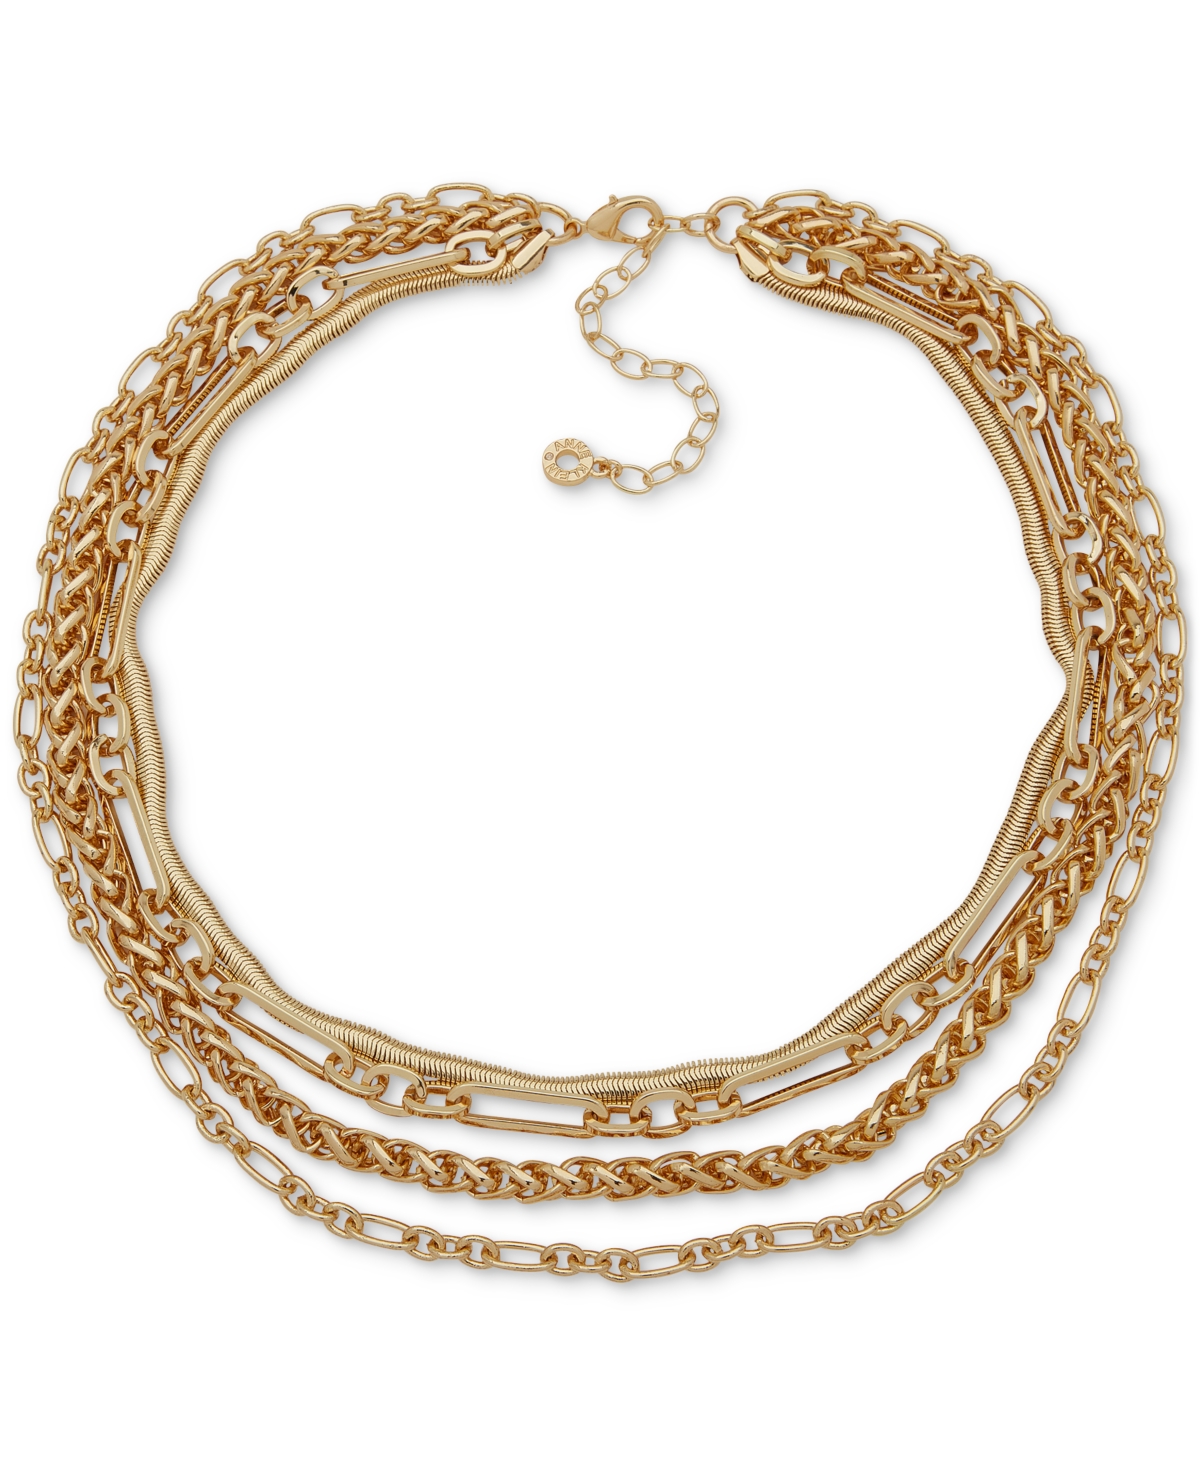 Gold-Tone Multirow Statement Necklace, 16" + 3" extender - Gold